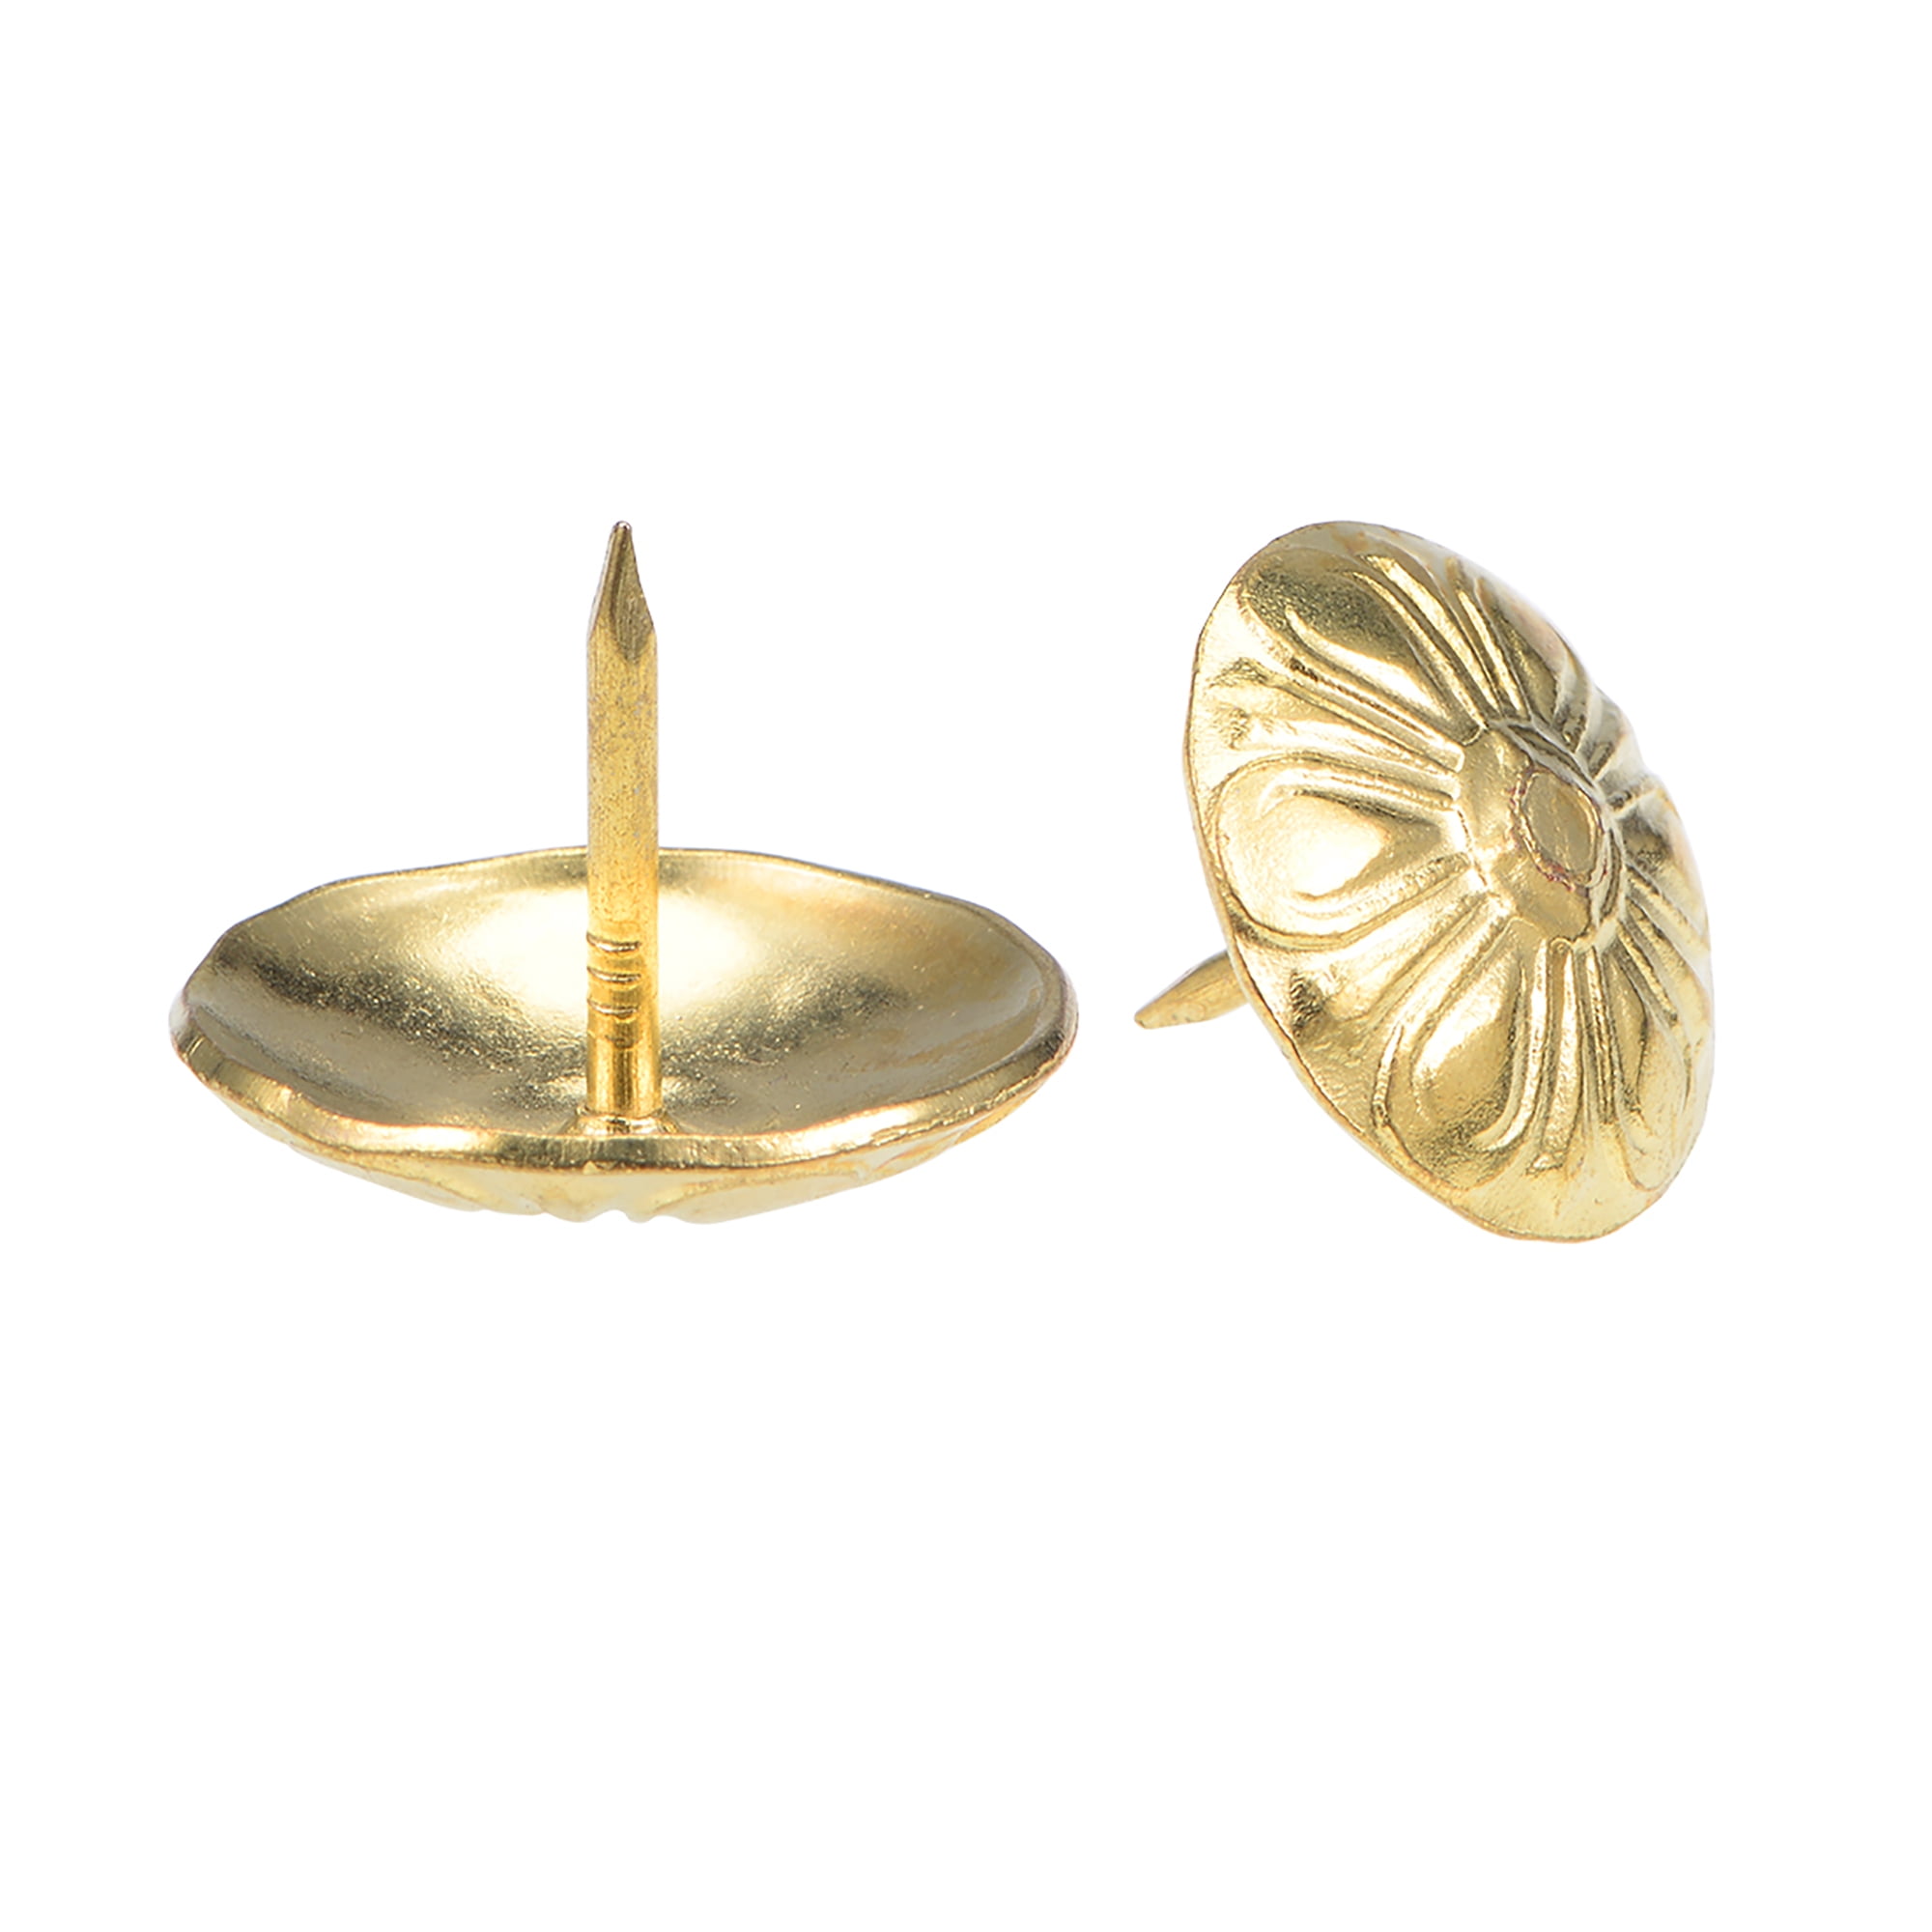 Upholstery Nails Tacks 19mm Head Dia Antique Round Thumb Push Pins Gold